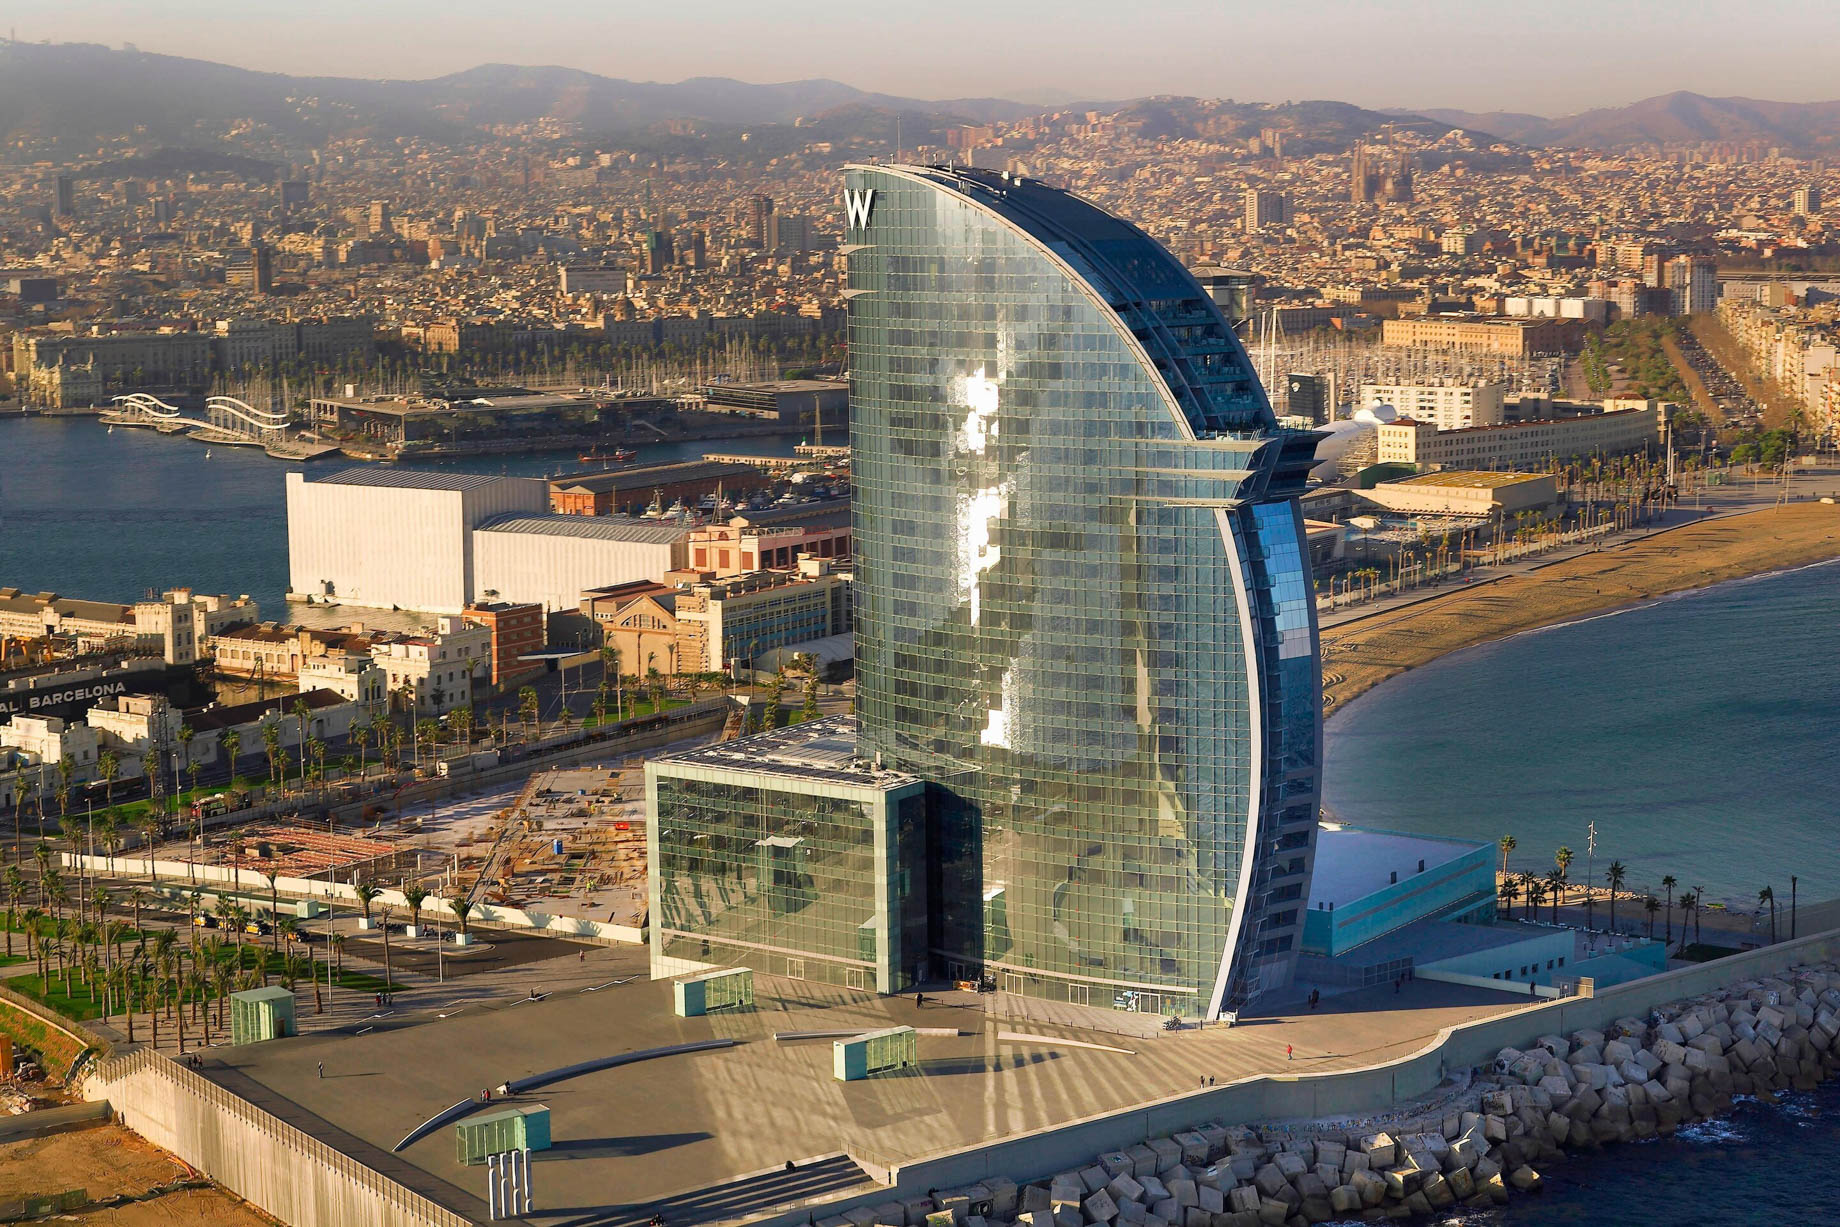 W Barcelona Hotel - Barcelona, Spain - Hotel City View Aerial